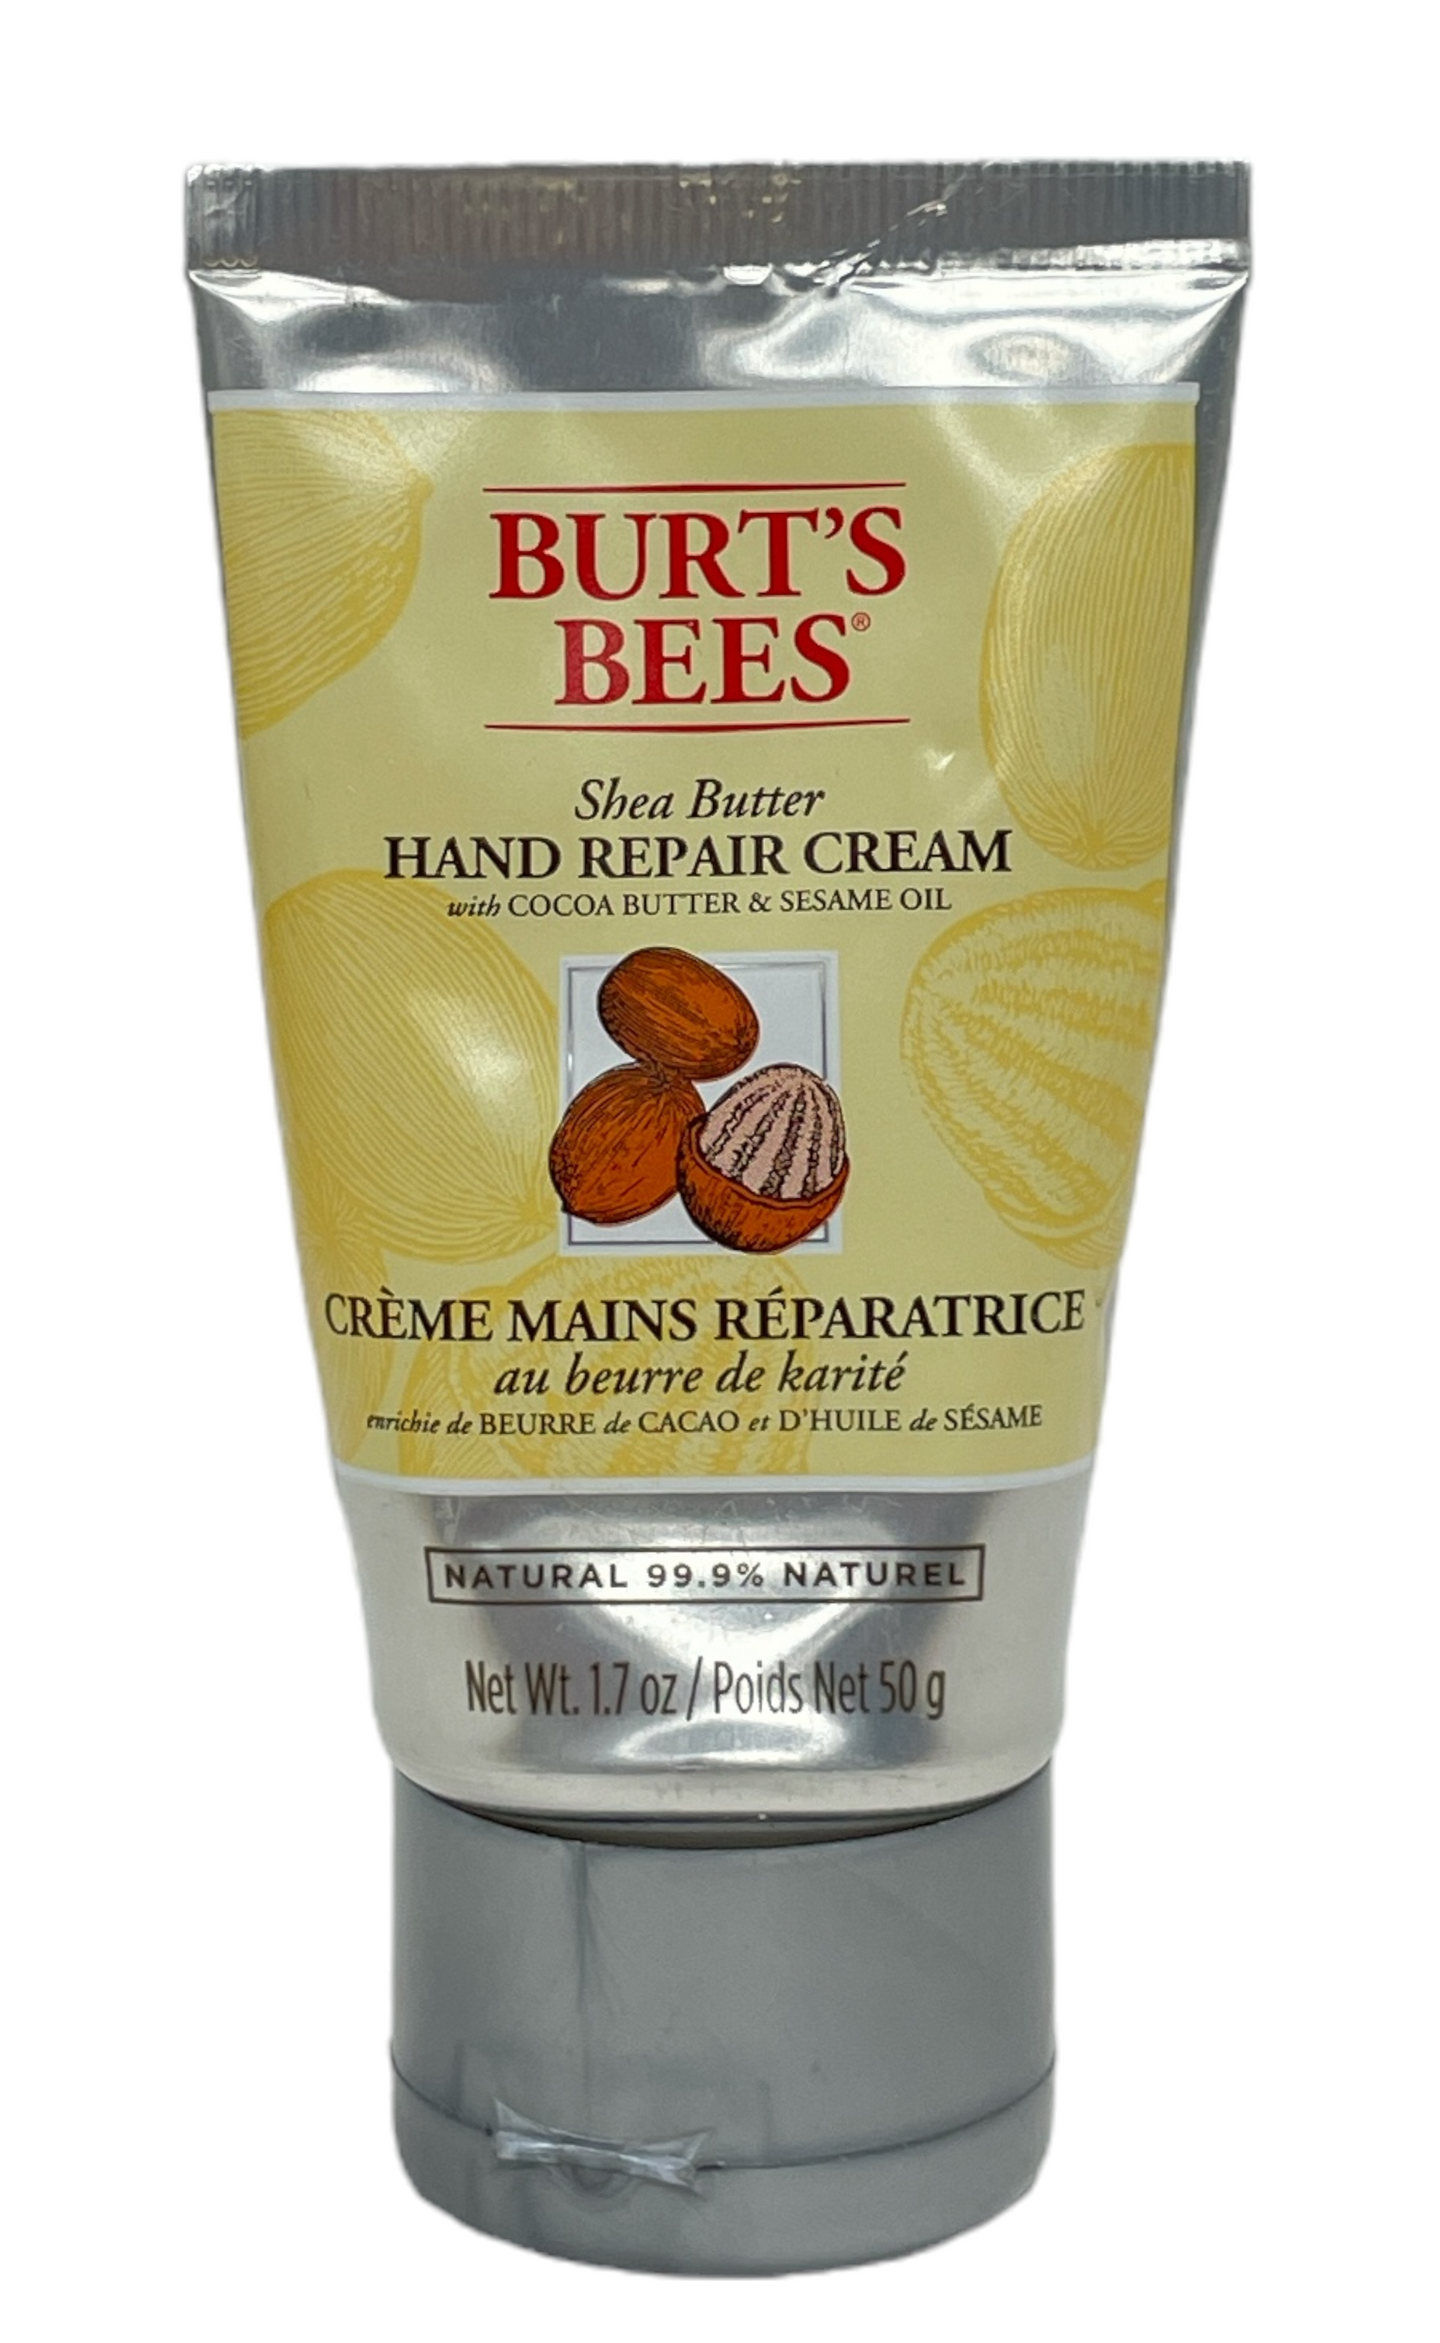 Burt's Bees Shea Butter Hand Repair Cream (1.7oz / 50g)